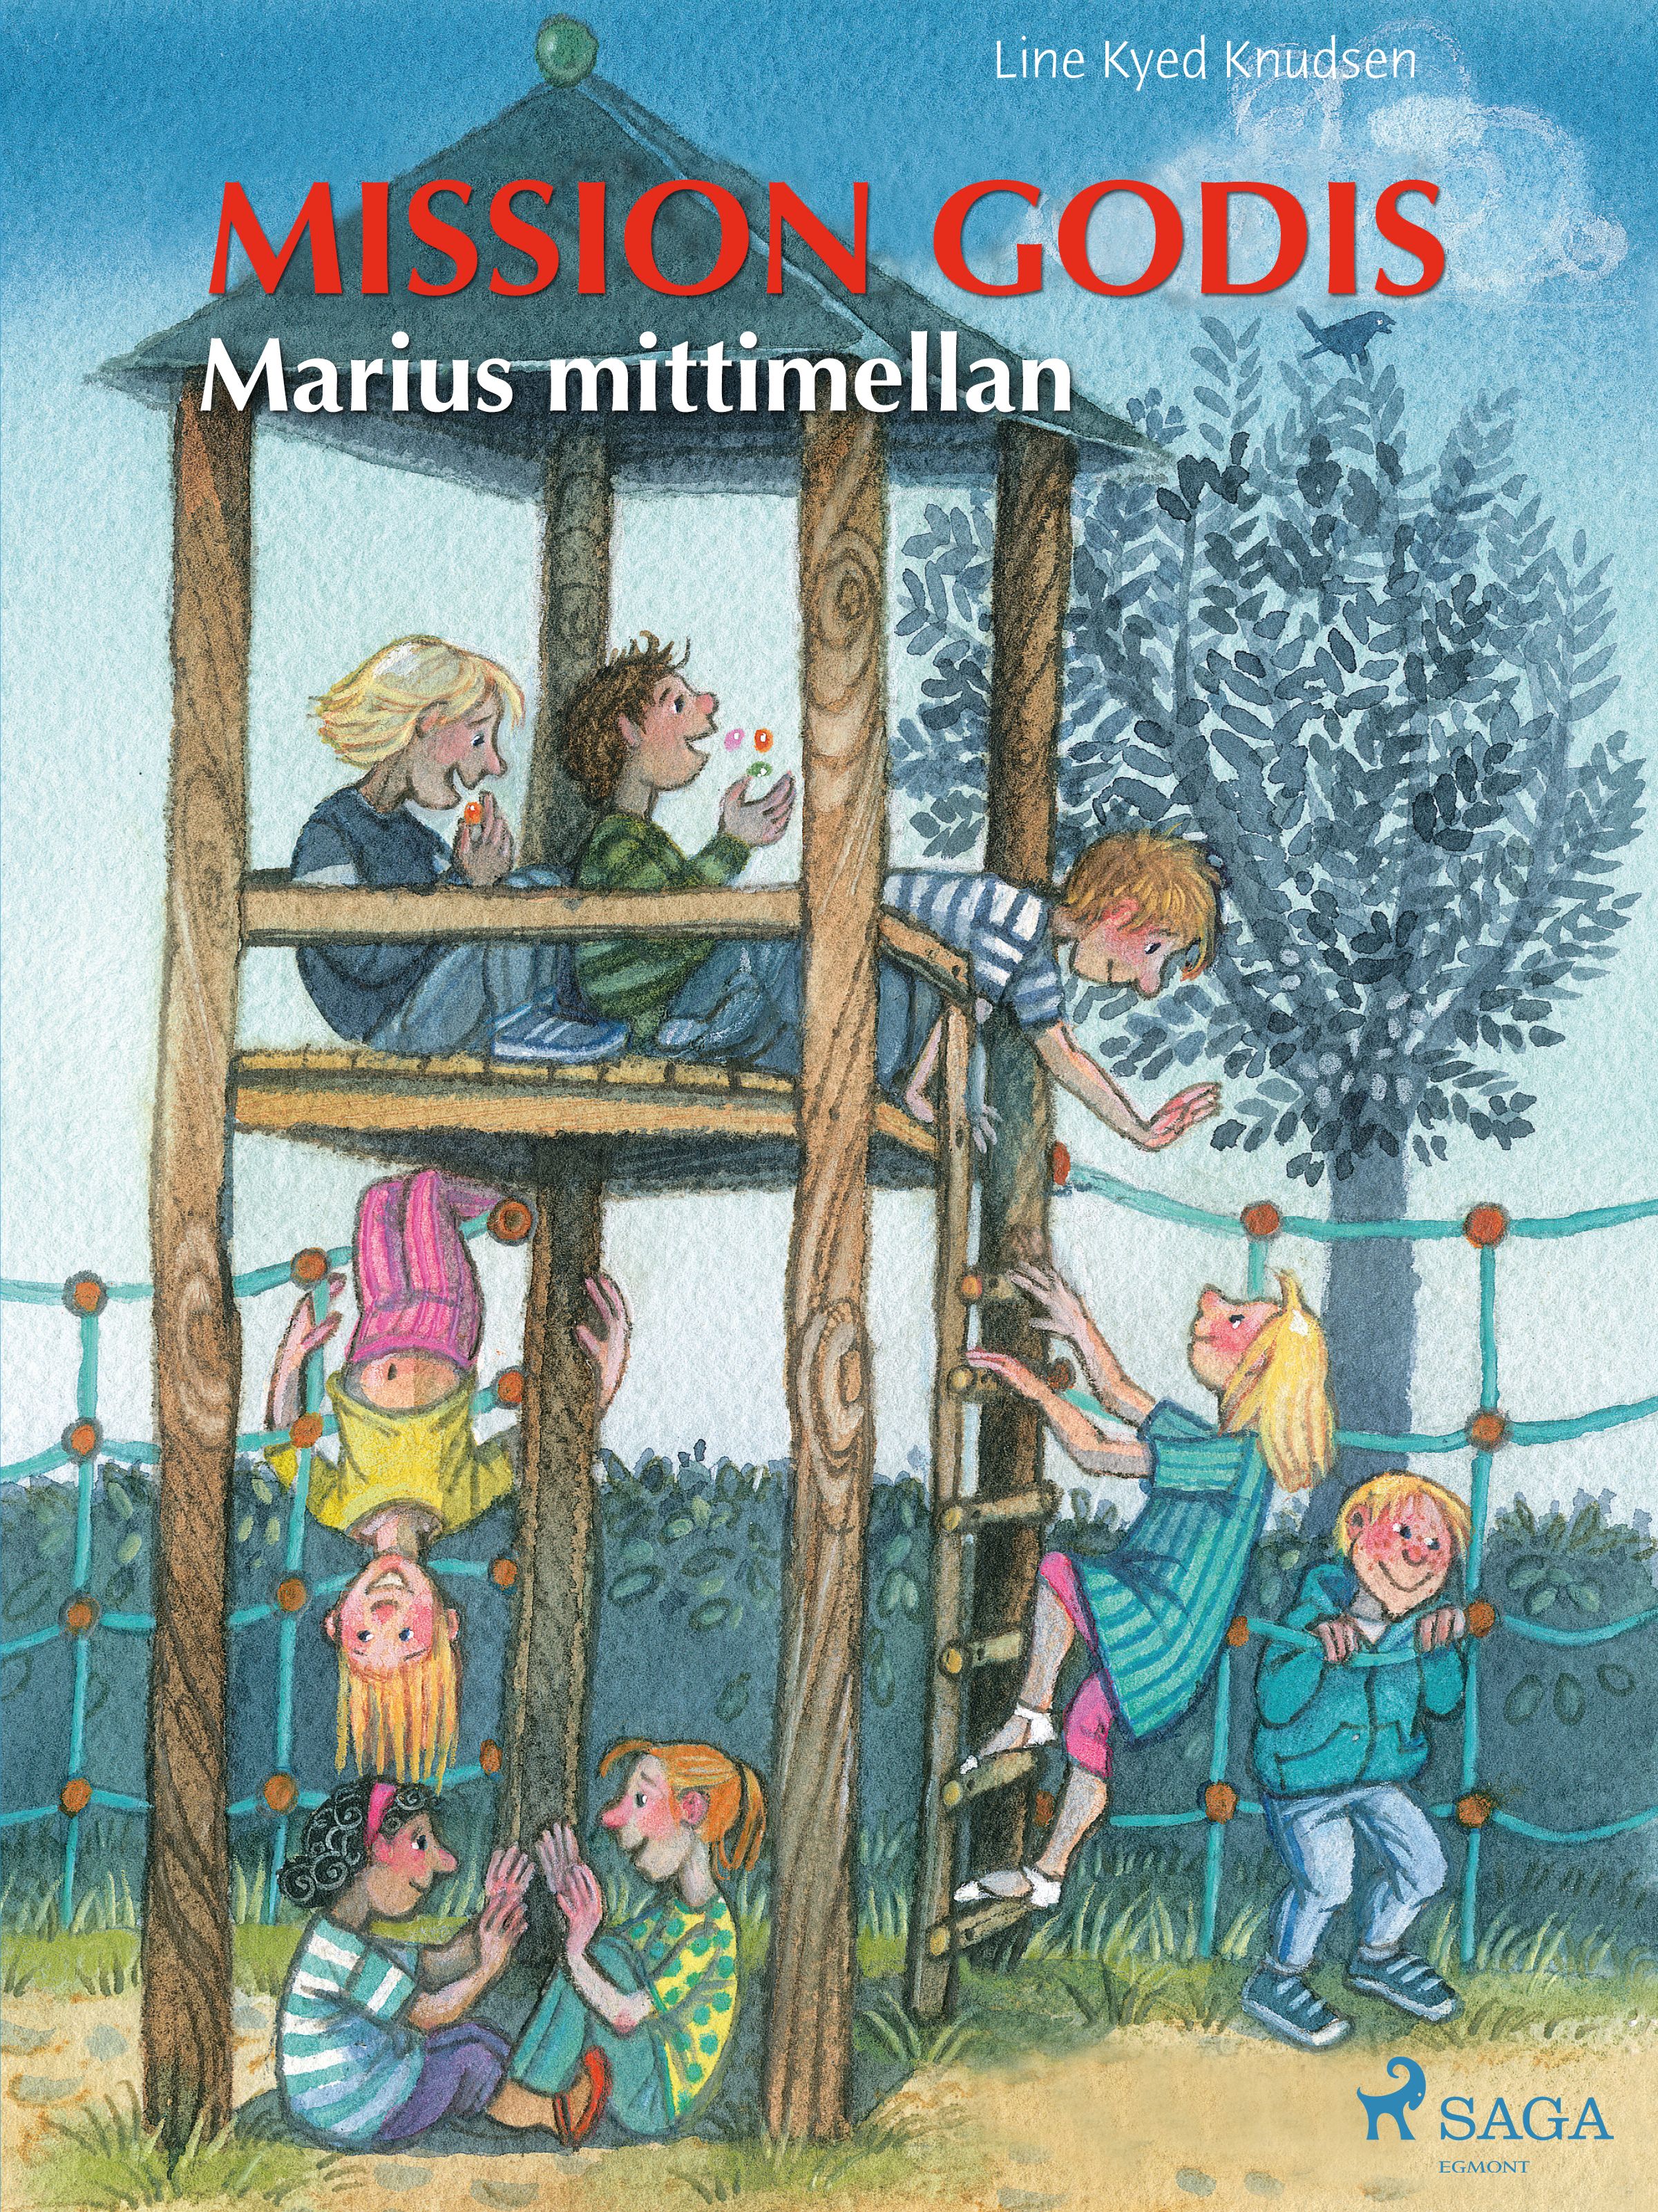 Marius mittimellan: Mission Godis, e-bog af Line Kyed Knudsen